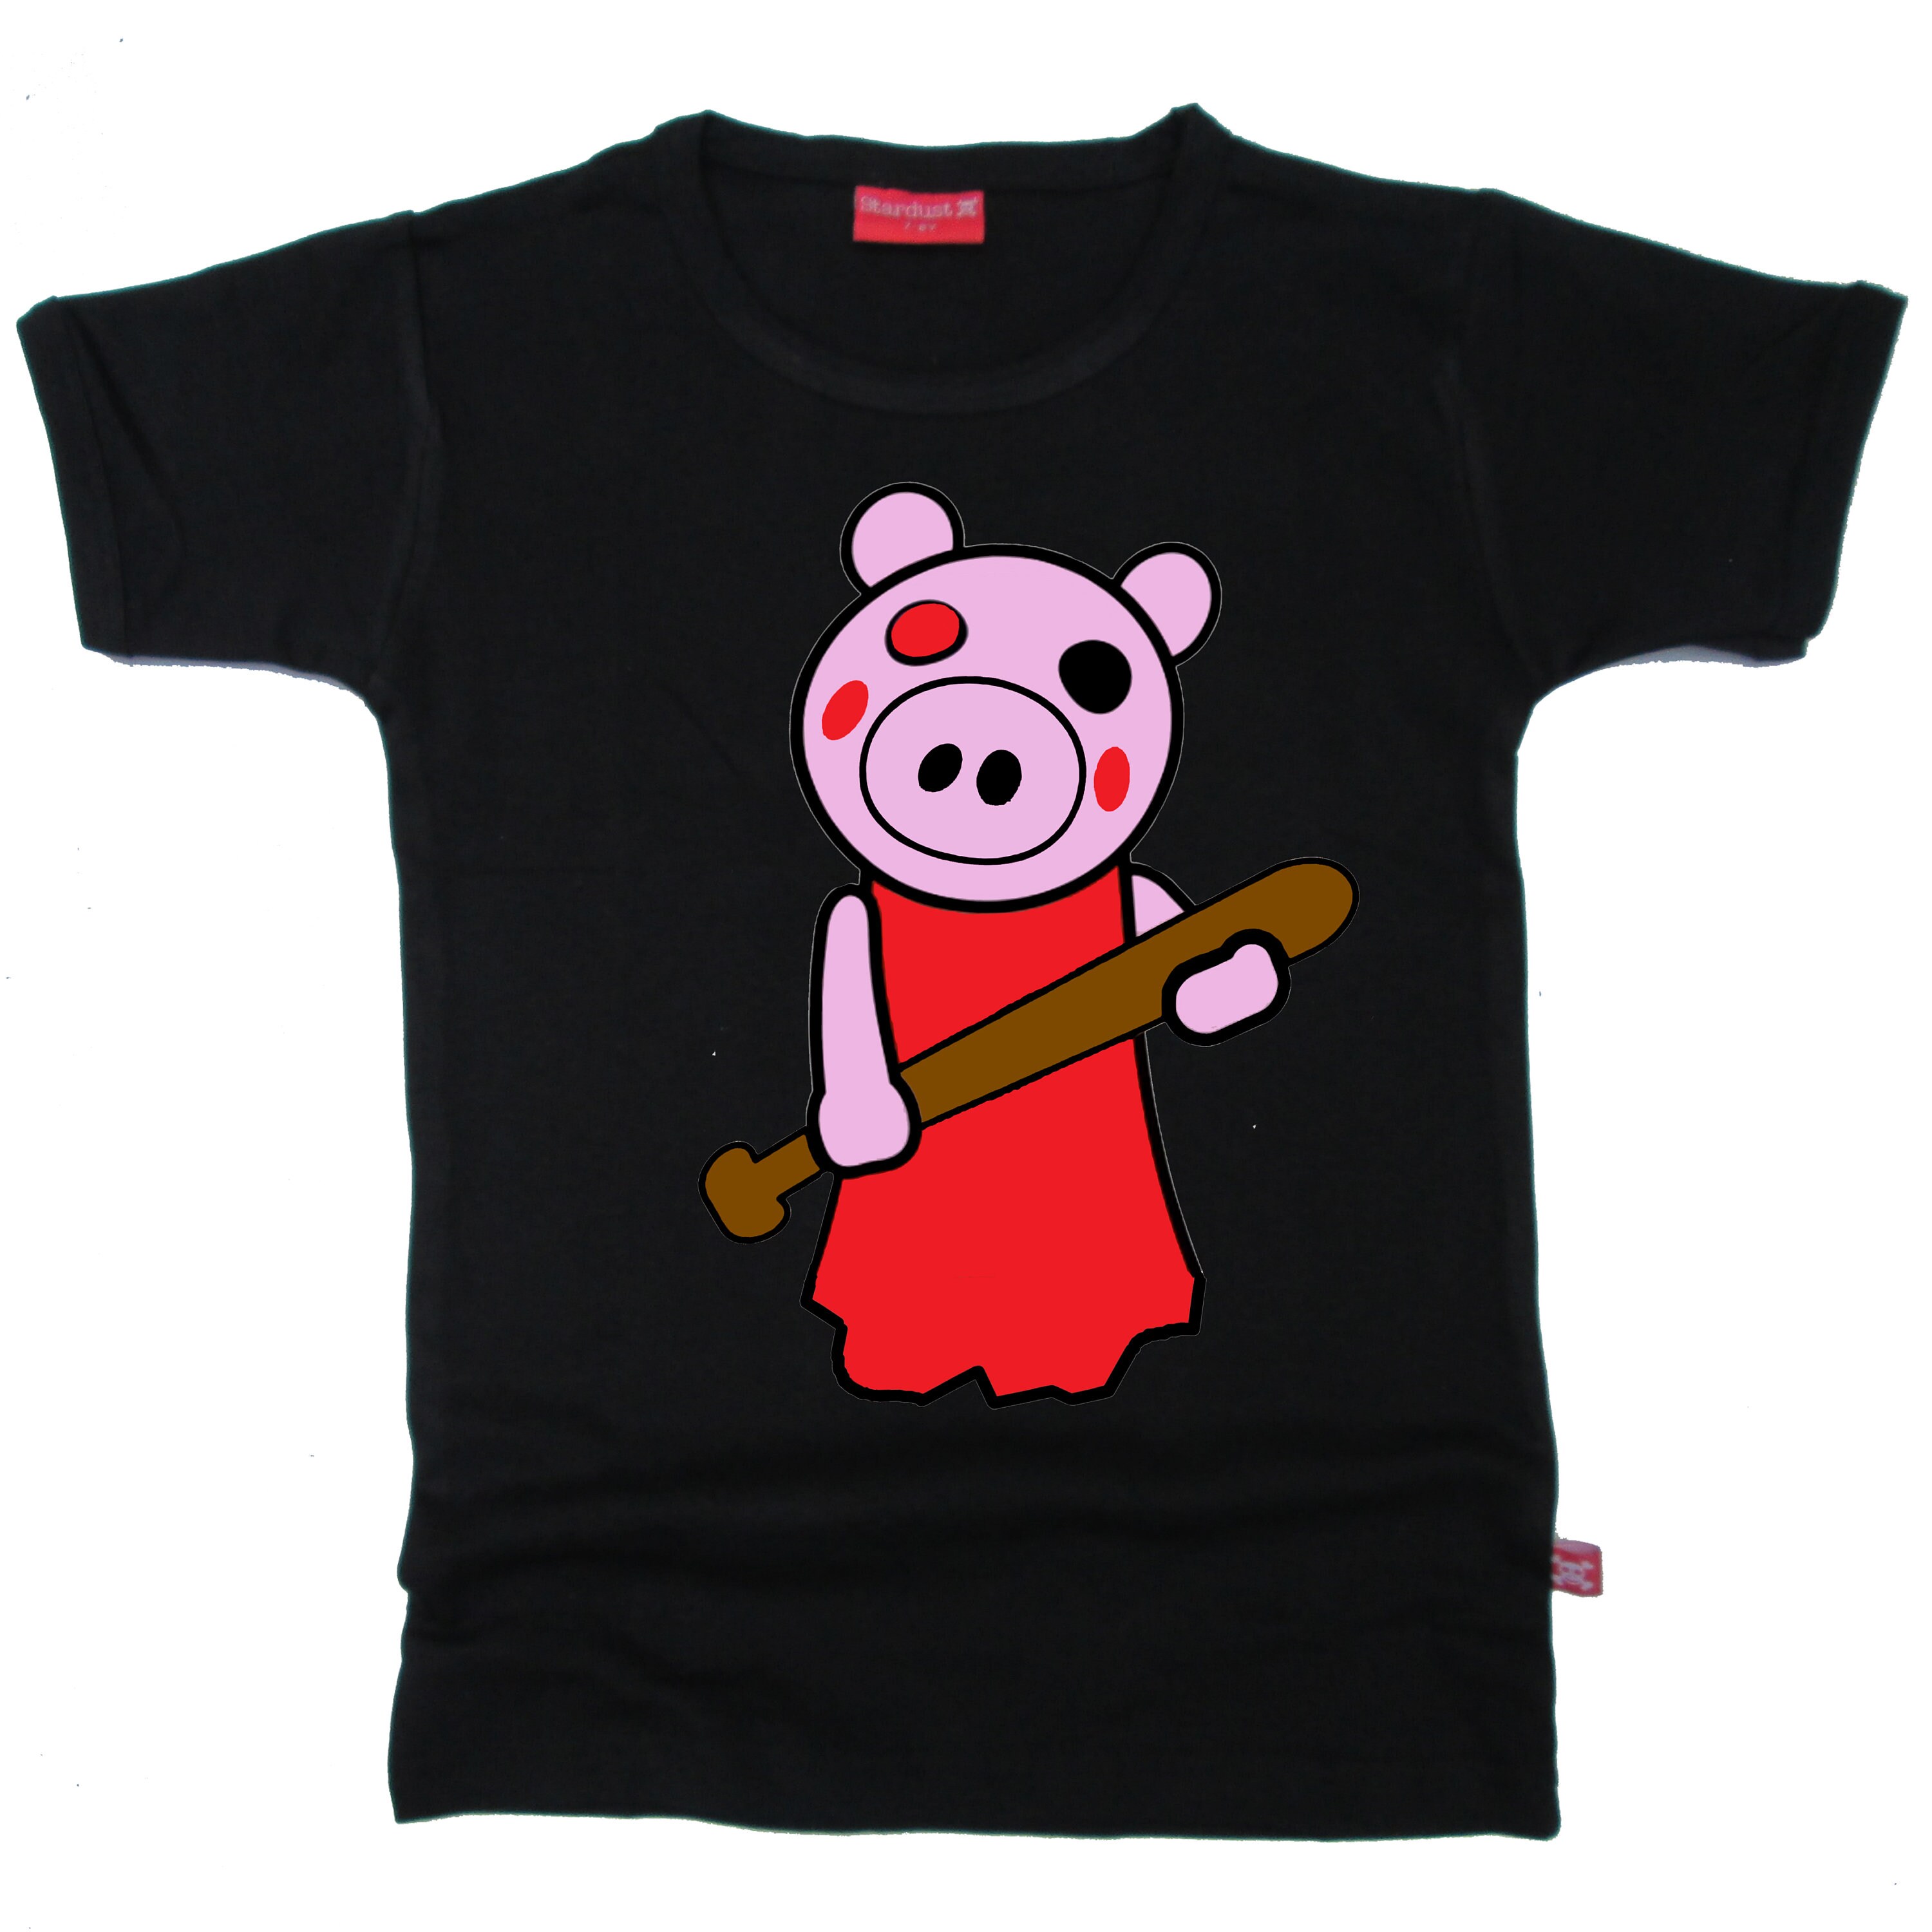 Roblox Piggy Horror Game Shirt Boys' Character Join Us T-Shirt Crewneck (5)  